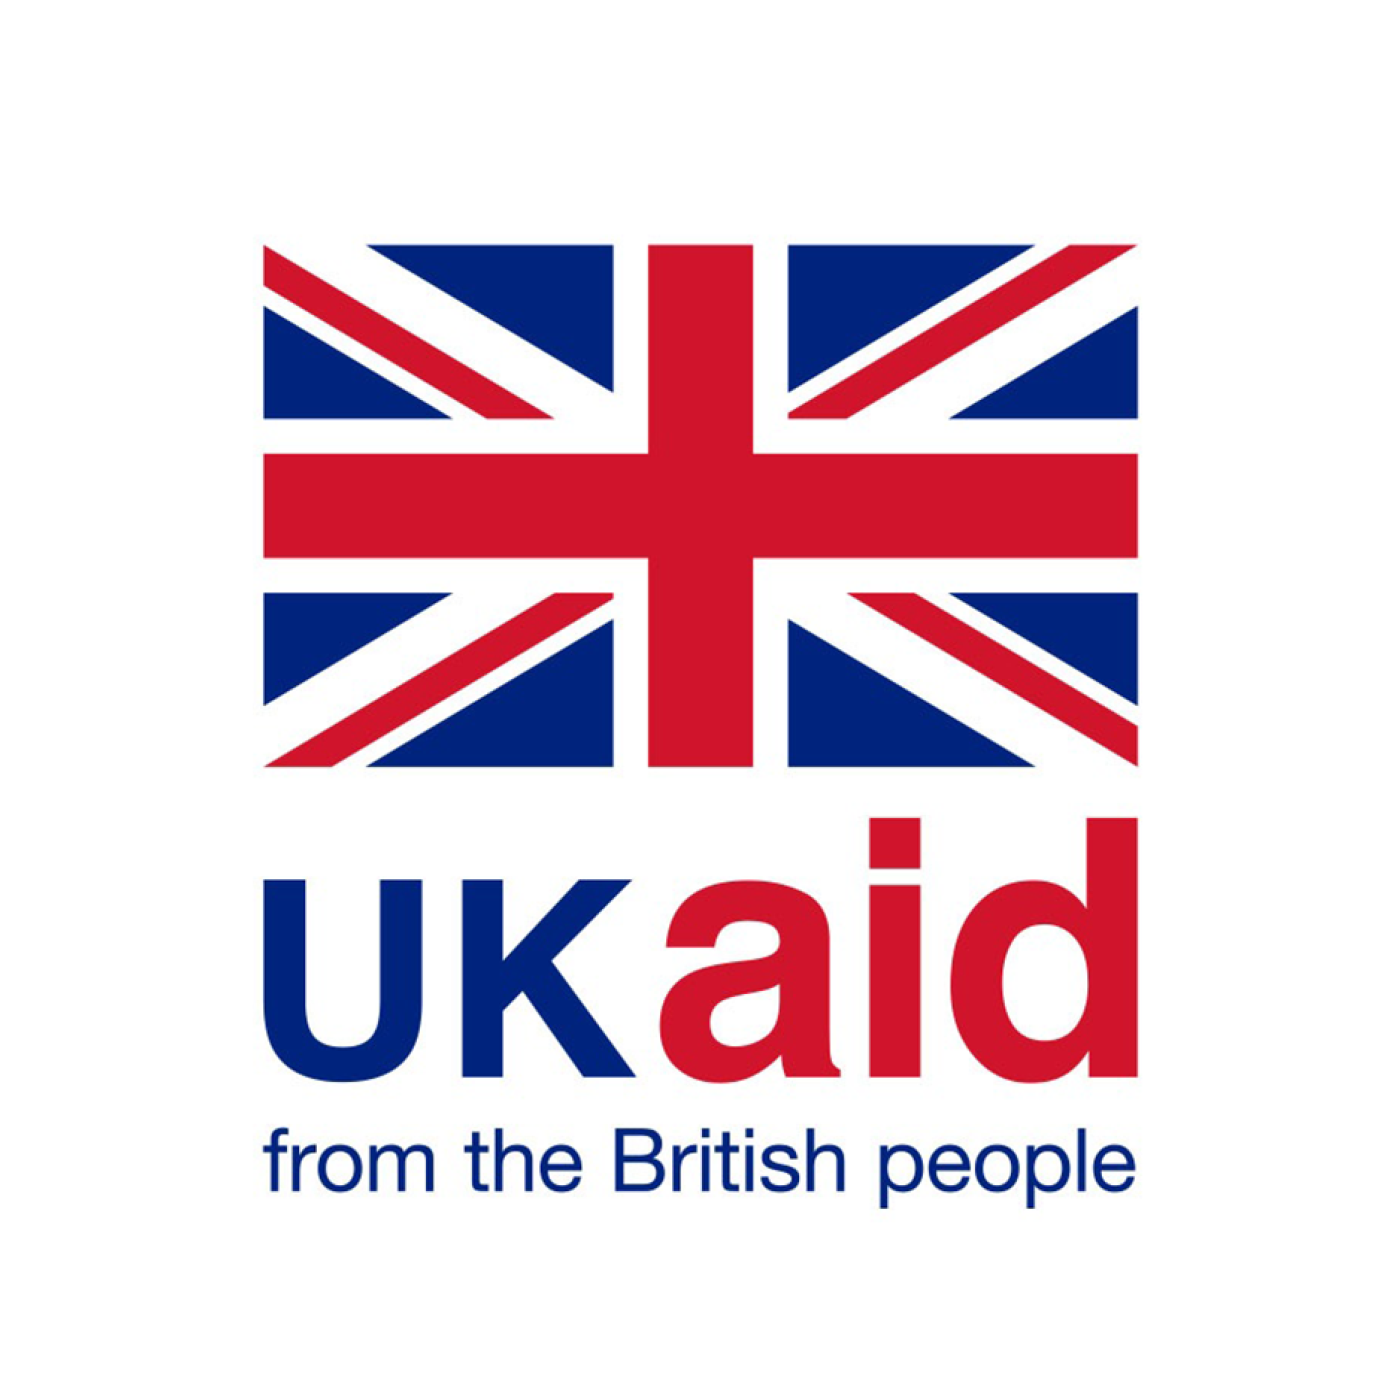 United Kingdom Department for International Development (UKAID)